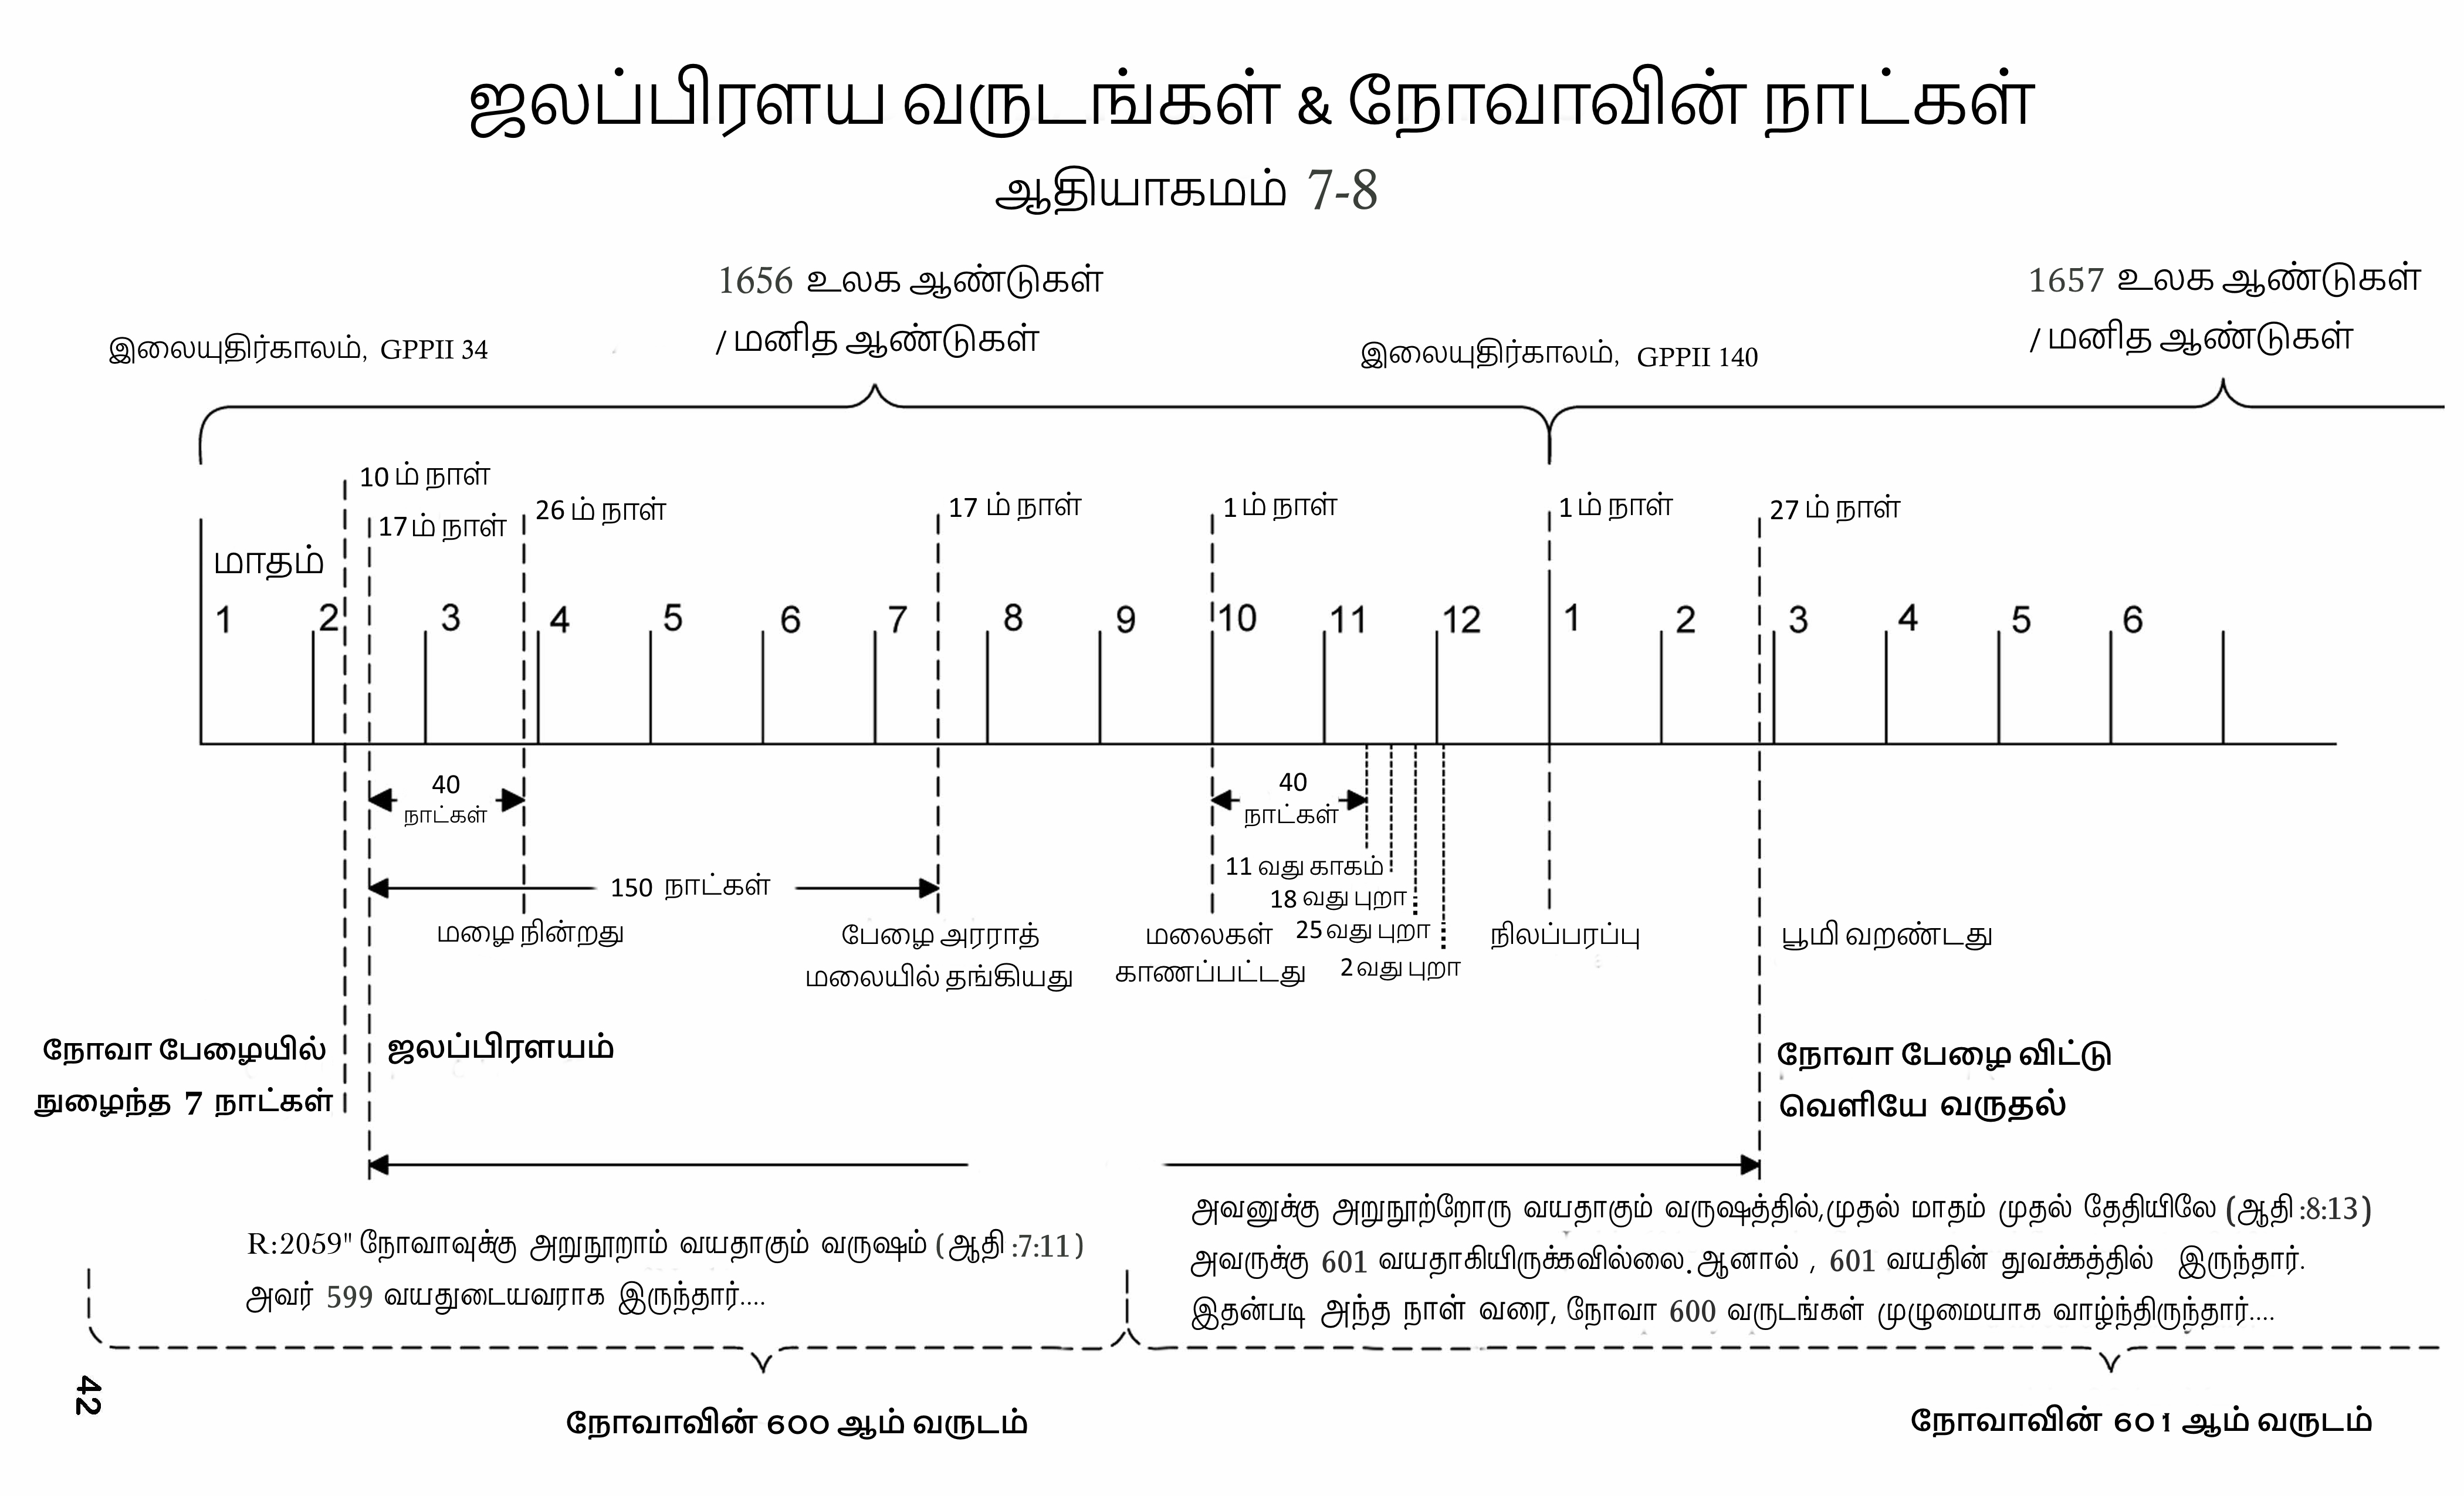 One year bible reading plan in tamil pdf